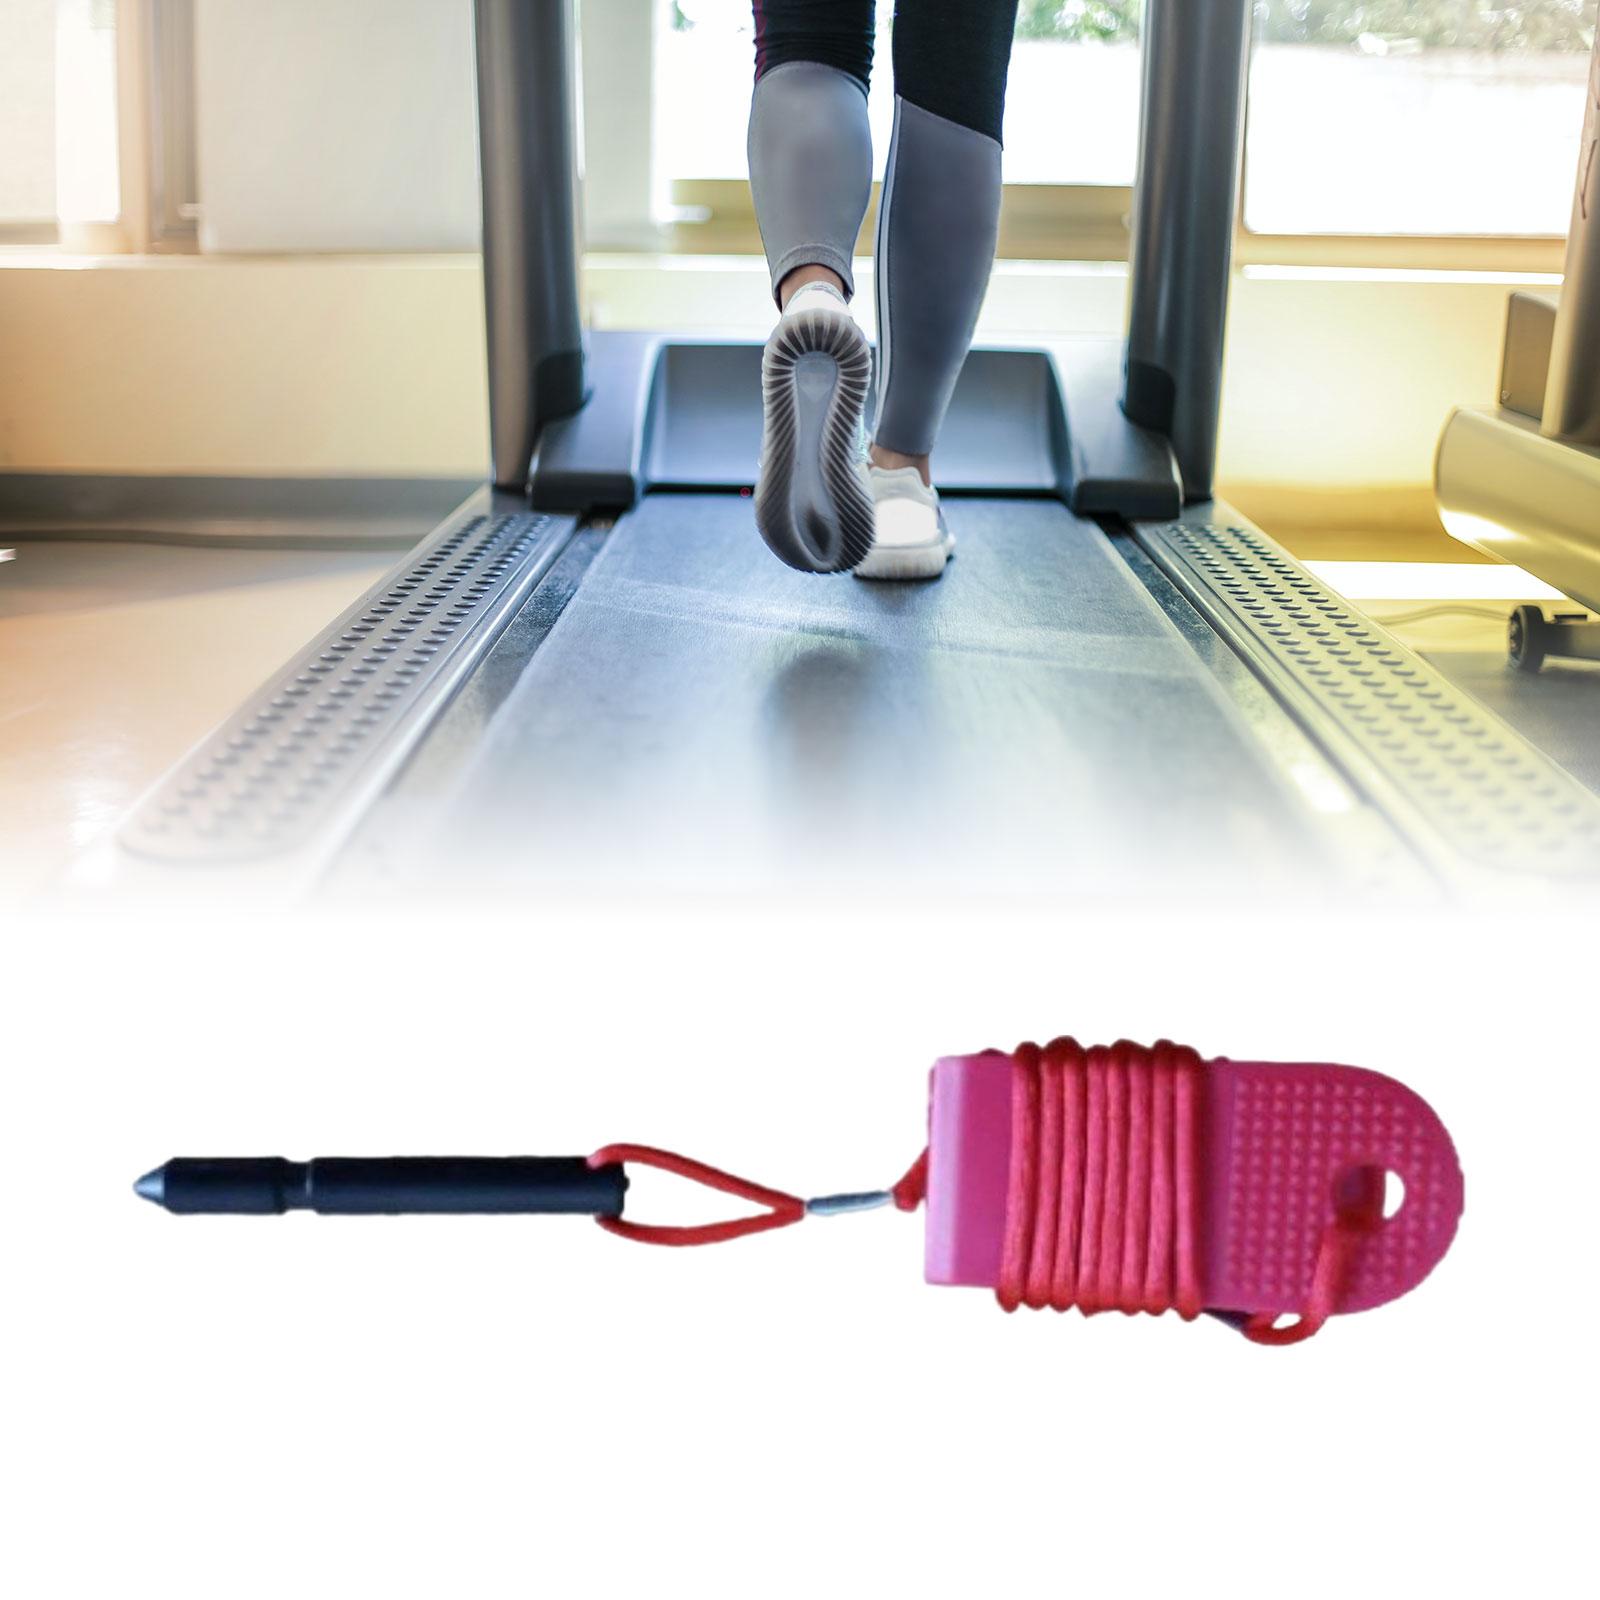 Treadmill Safety Keys Lock Emergency Stop Training Universal Security Switch